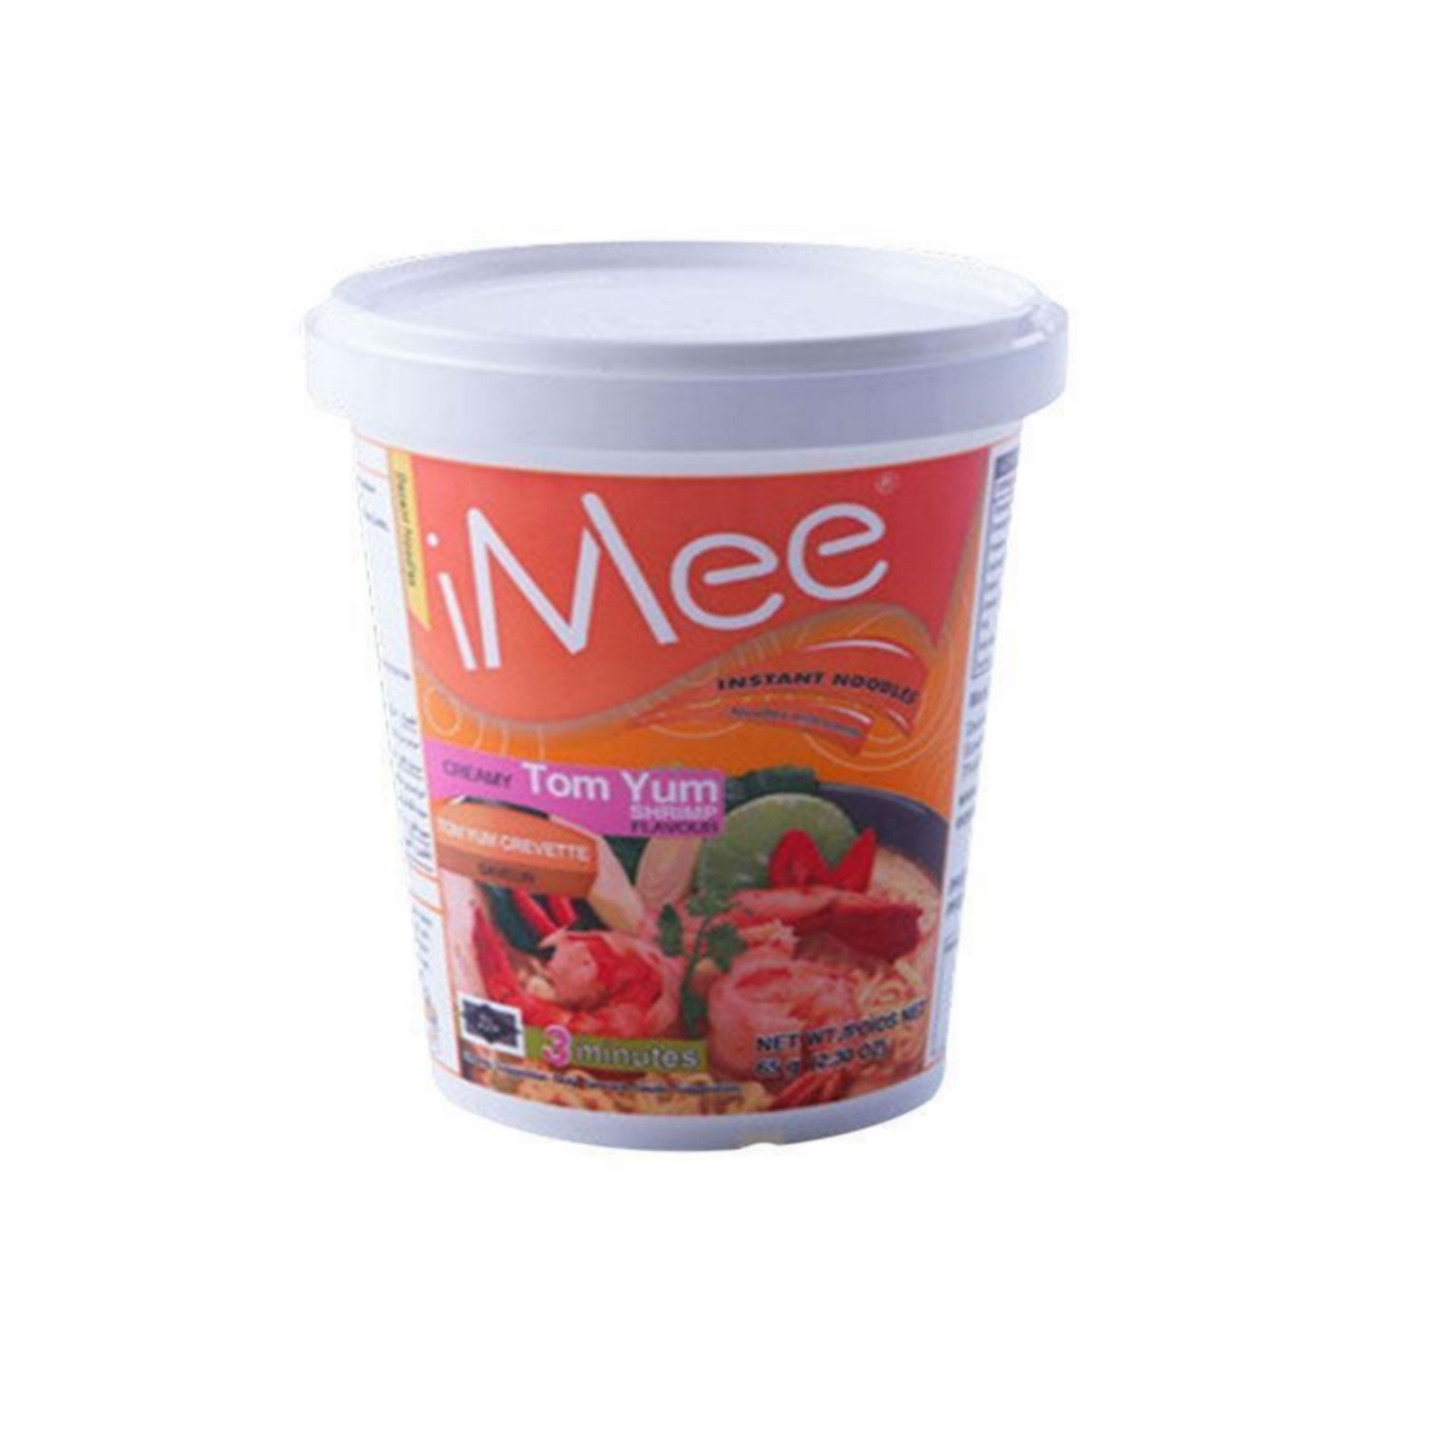 Imee Instant Cup Noodle - Tom Yum Shrimp Flavor 3 X 70 G